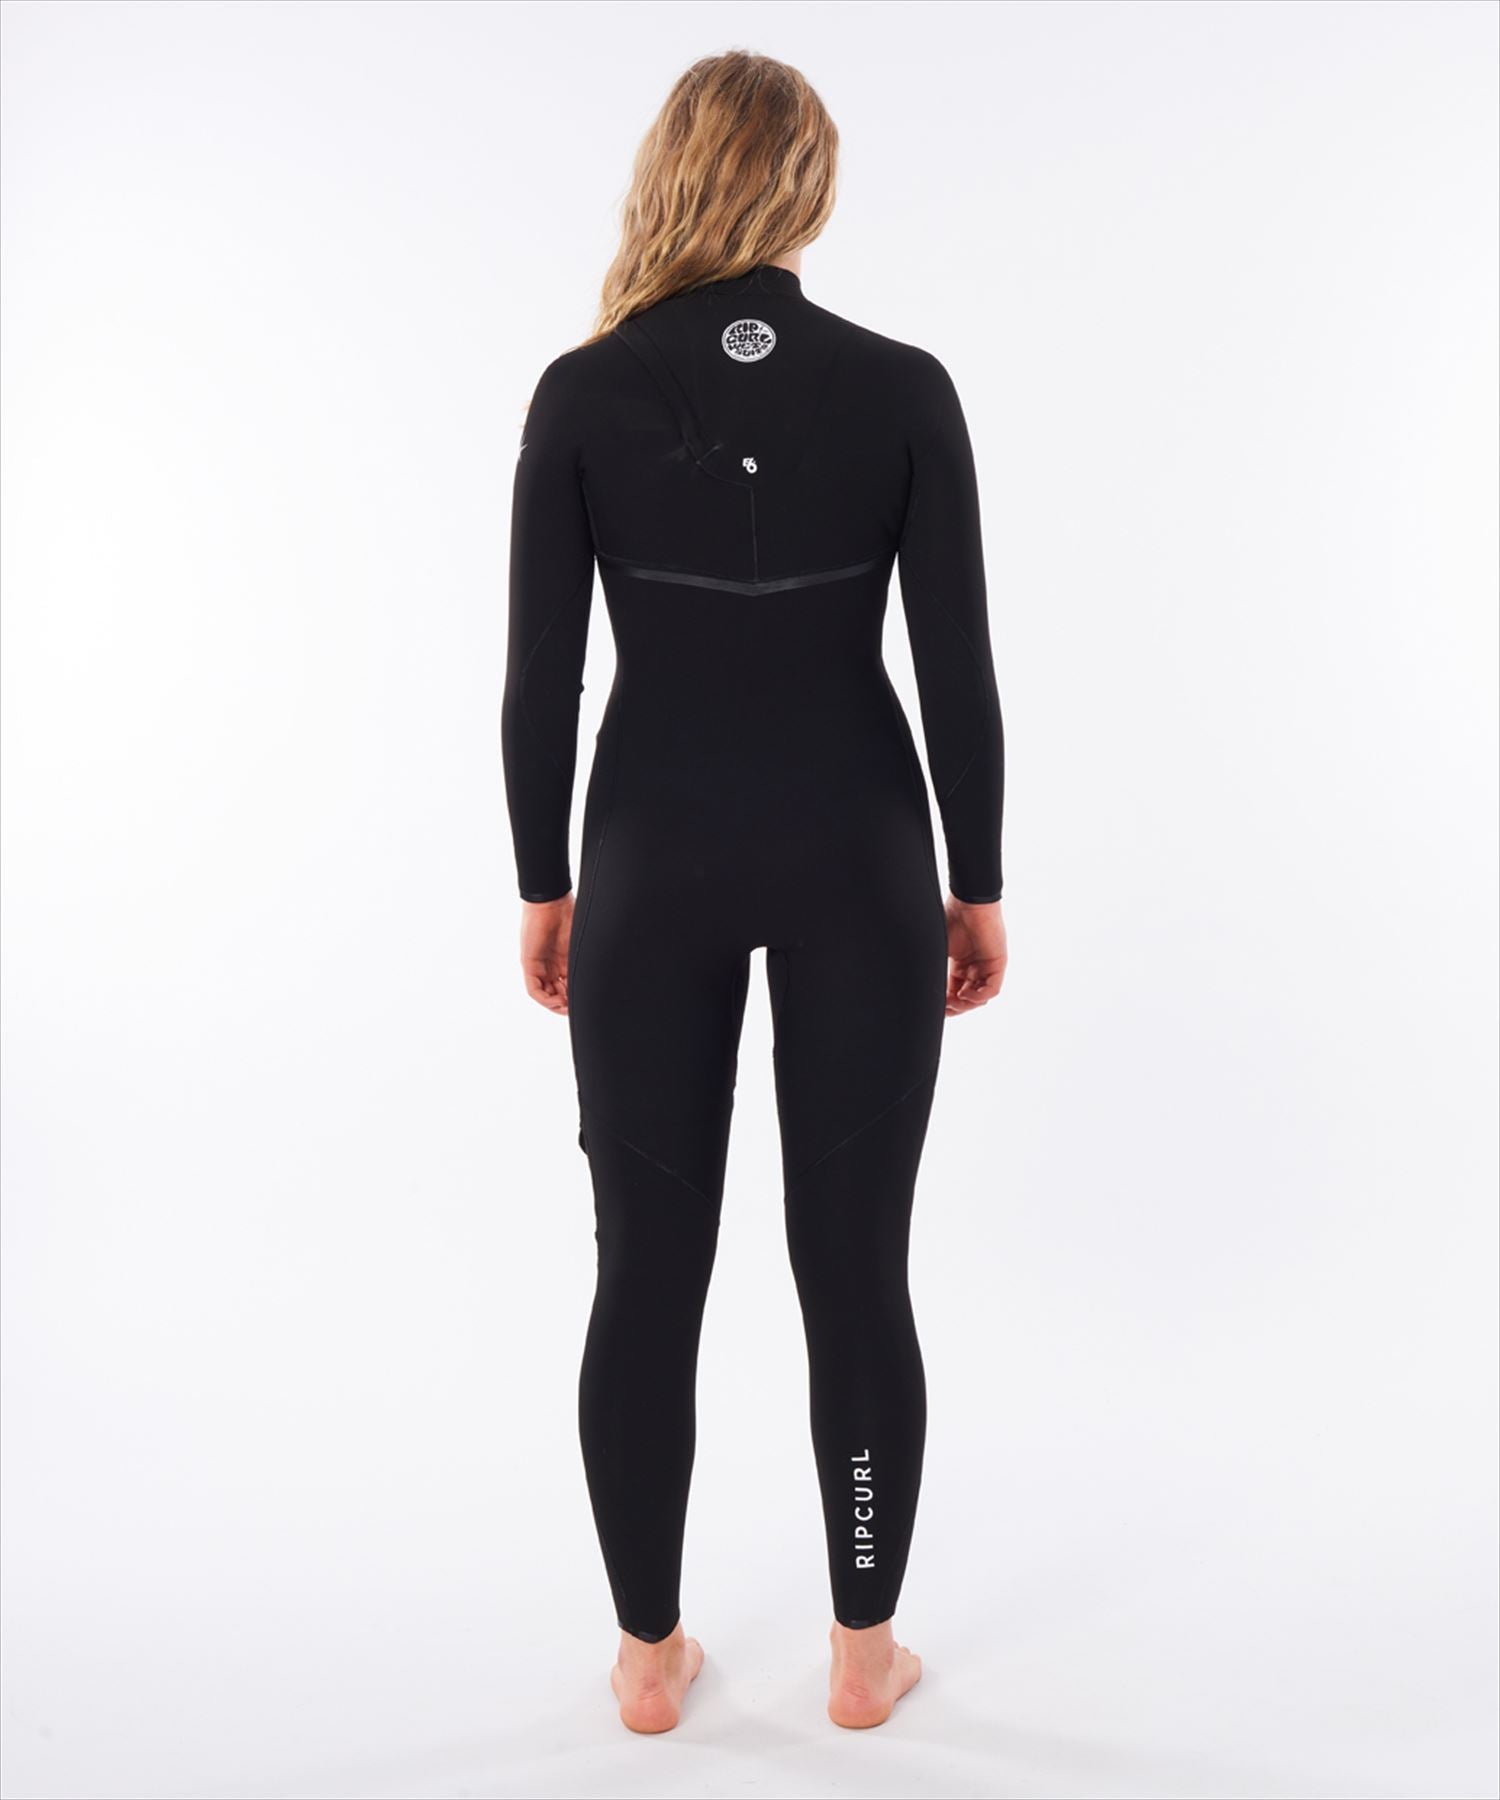 [SALE] [Spring/Autumn] Women's E BOMB 3/2mm Zip Free Full Suit Wetsuit